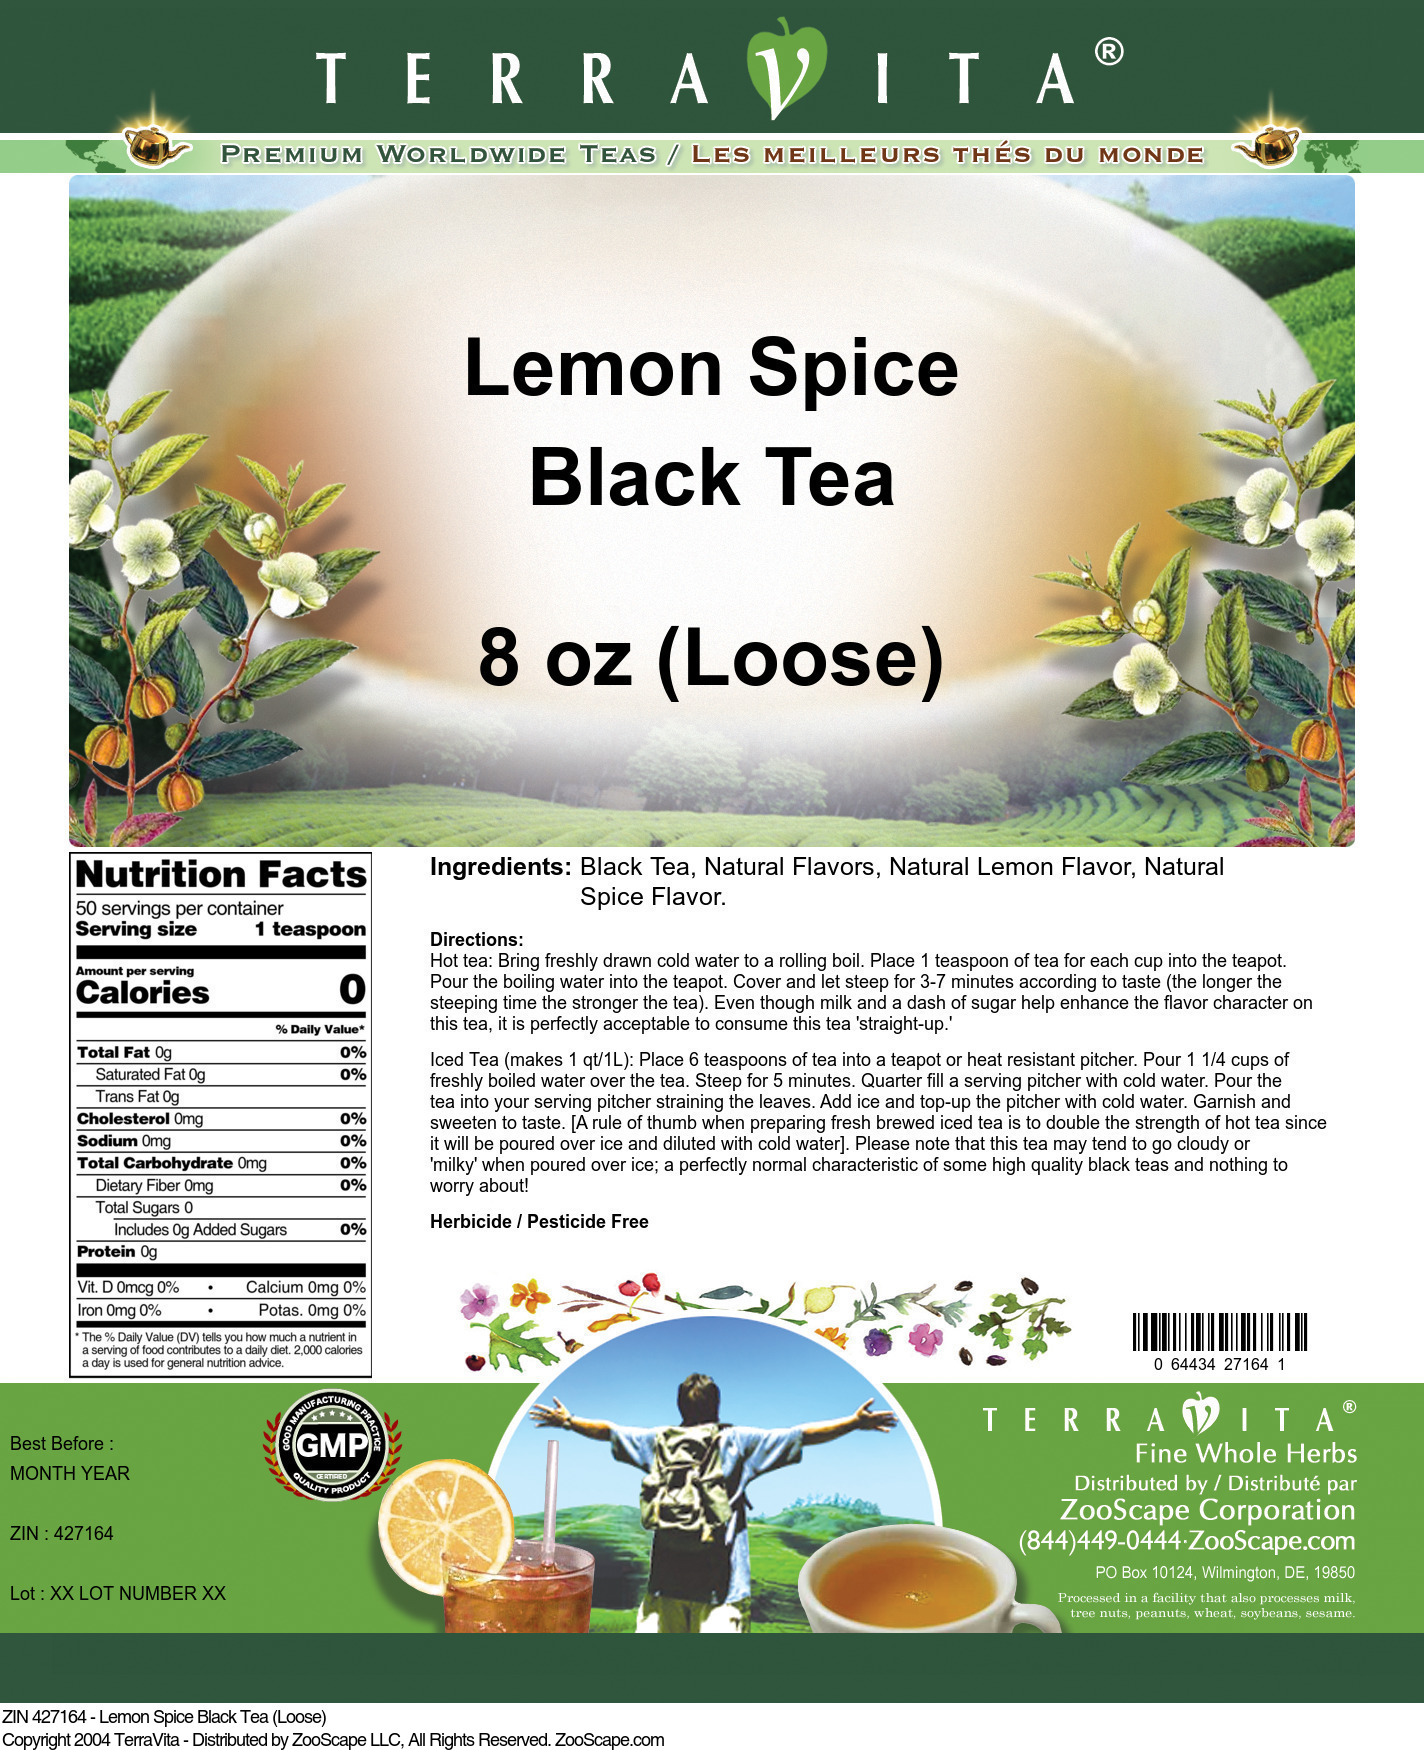 Lemon Spice Black Tea (Loose) - Label